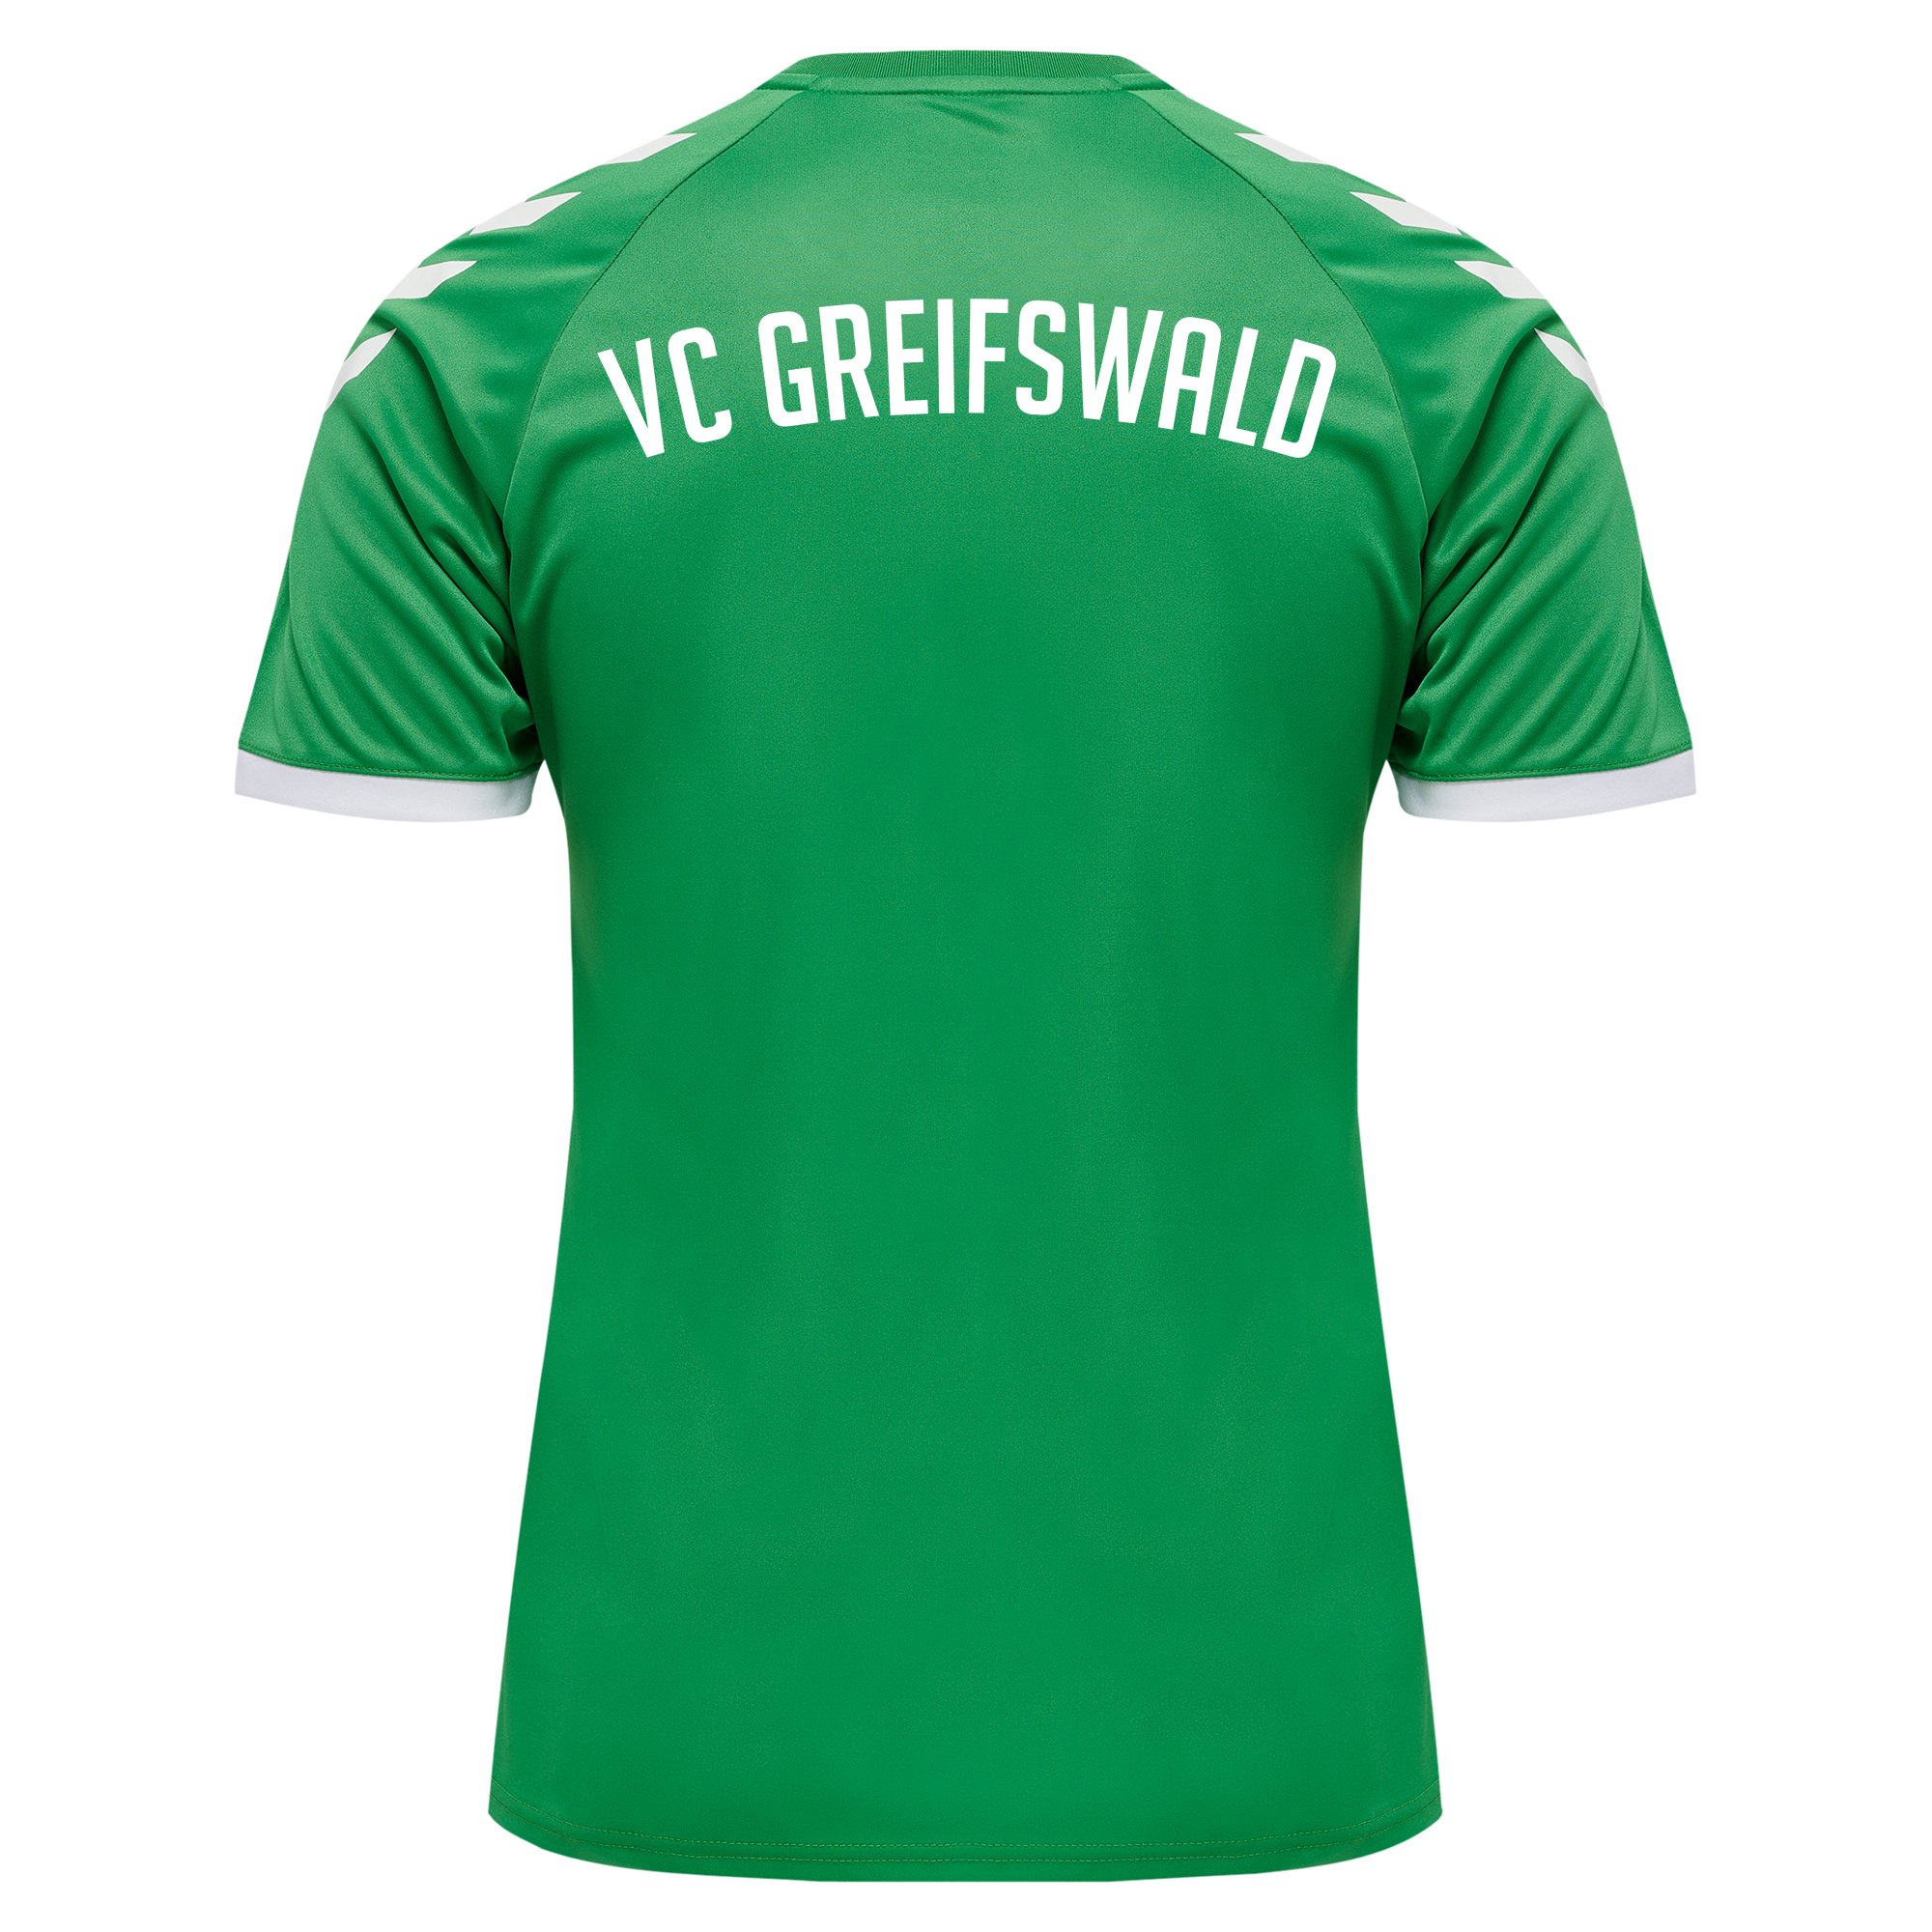 VC Greifswald Trikot